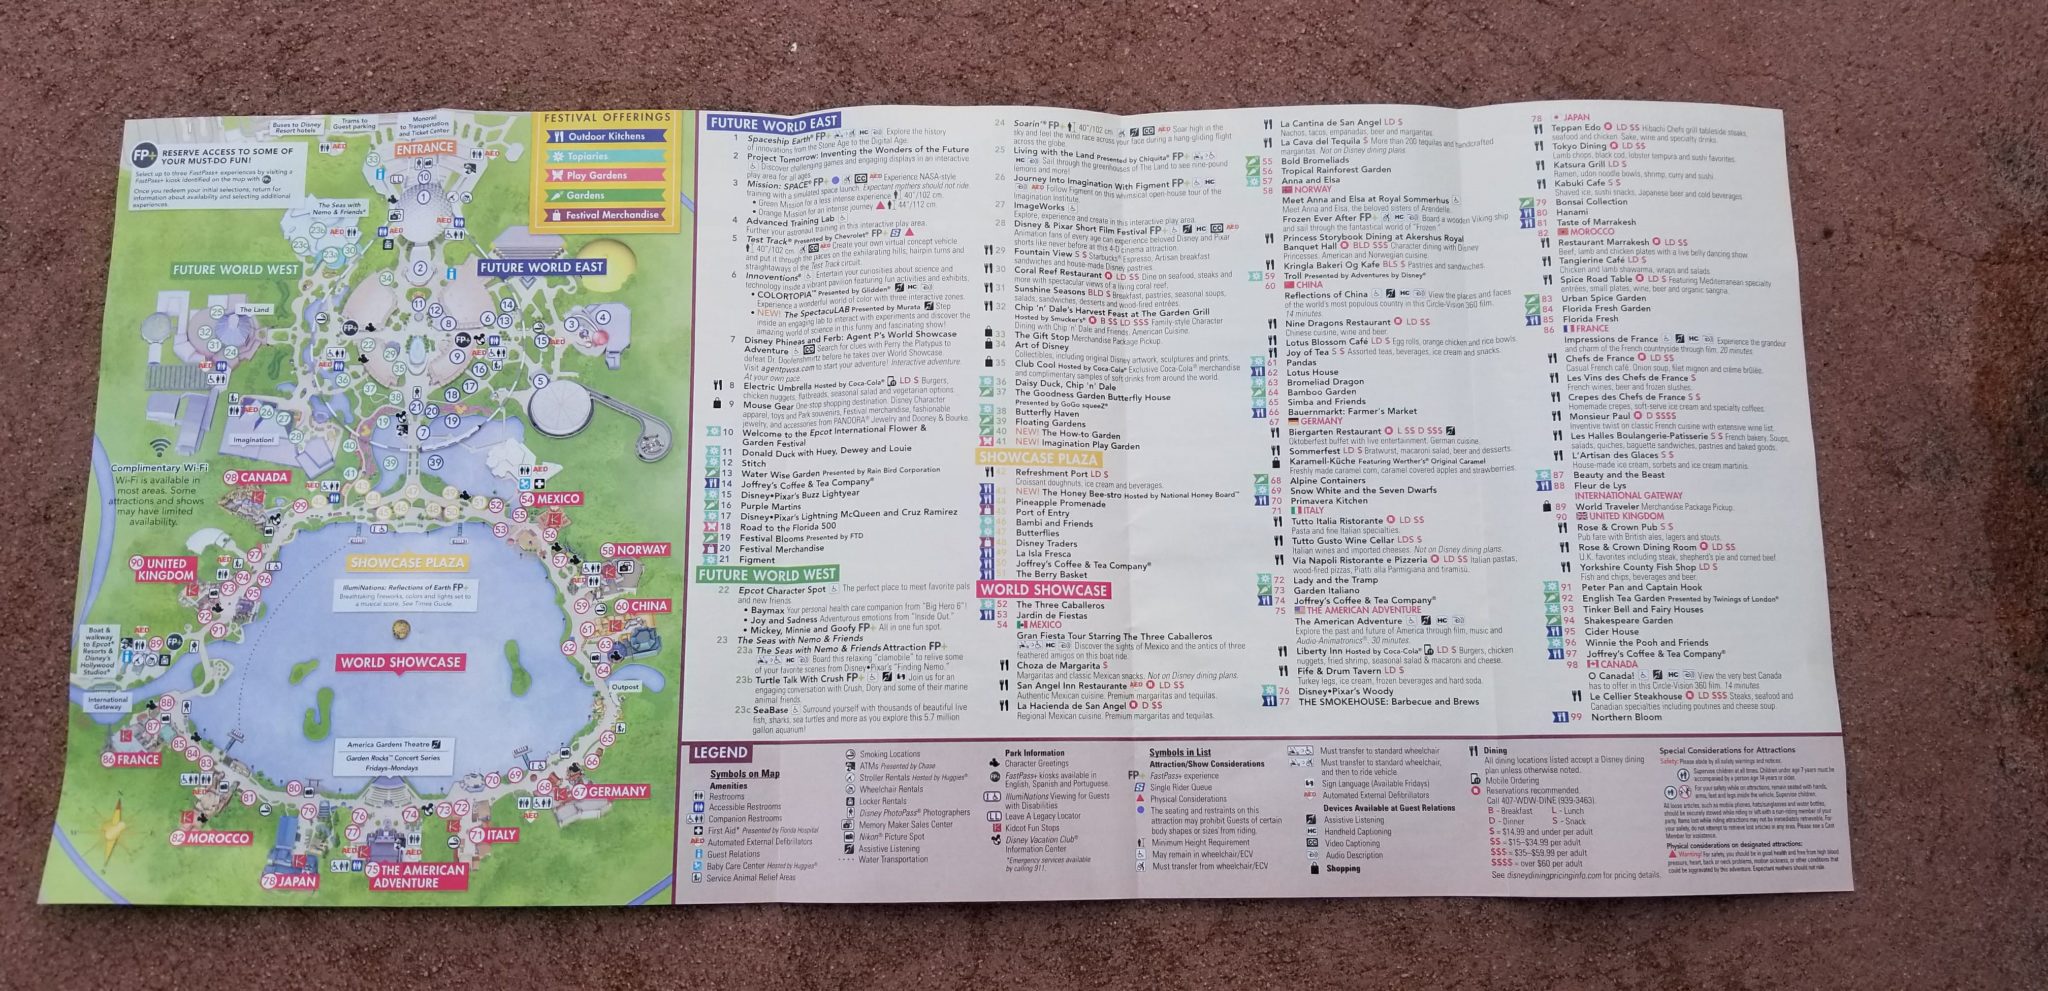 Park Maps for Epcot International Flower and Garden Festival